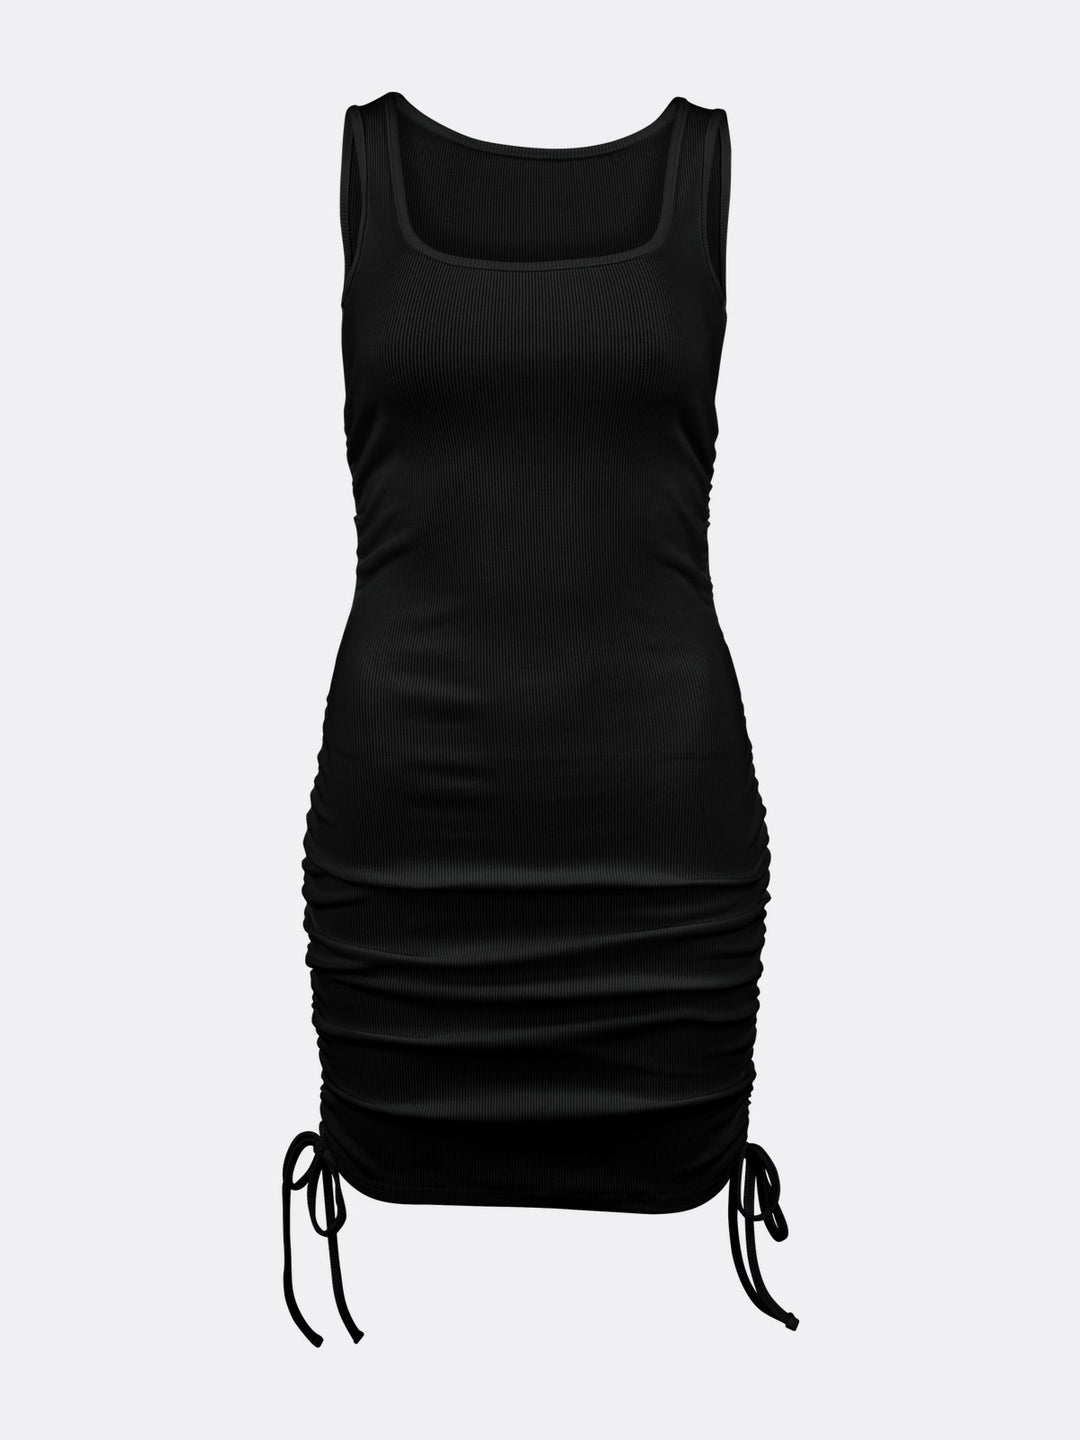 Sleeveless Square Collar Short Dress Featuring Adjustable Draping Black Ghost | Jolovies